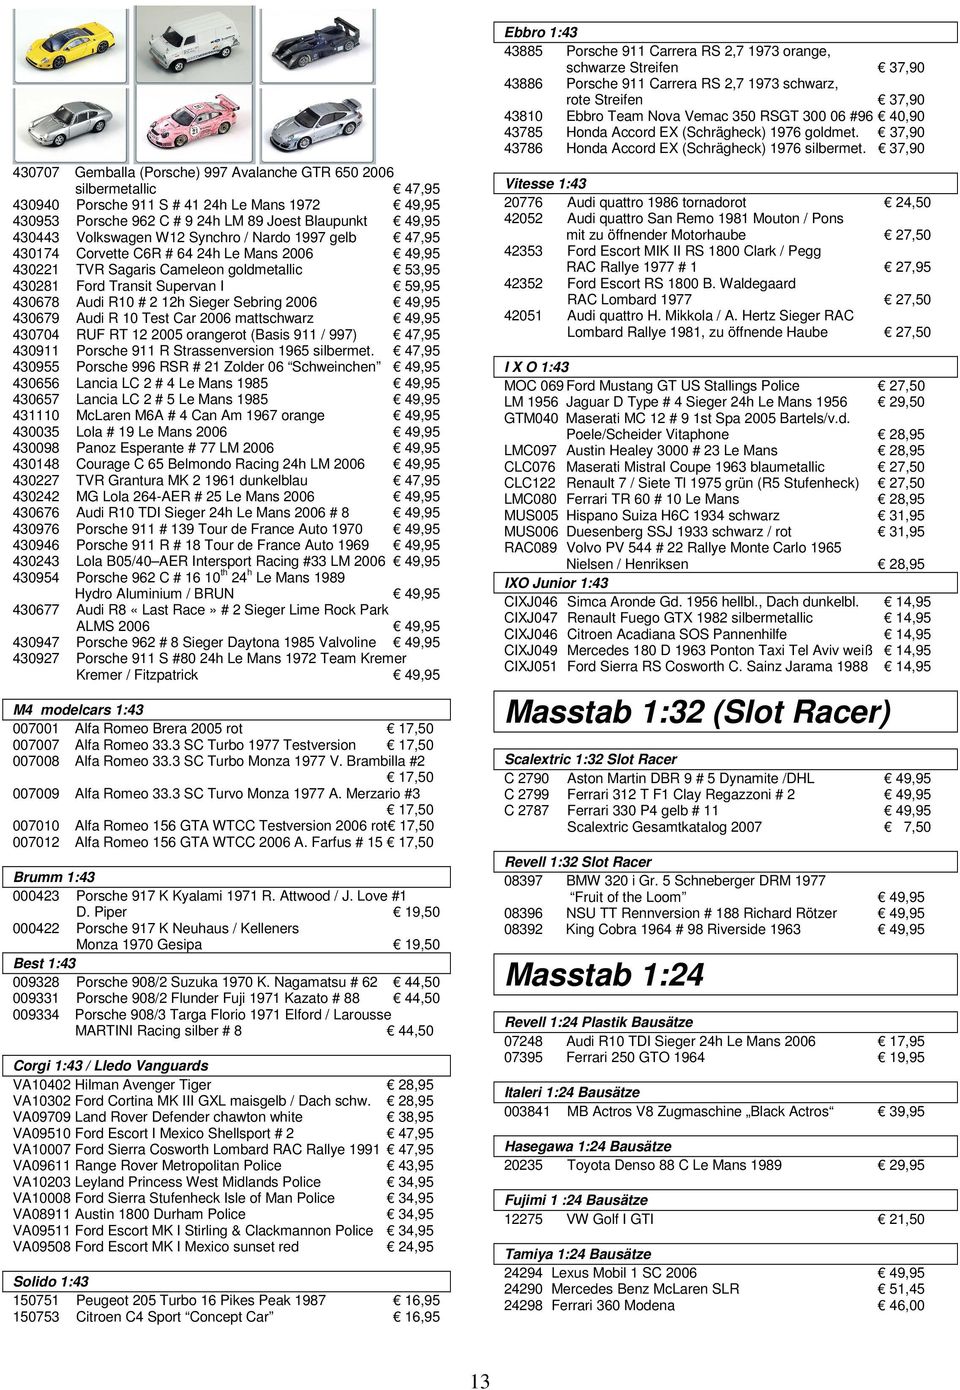 Sebring 2006 49,95 430679 Audi R 10 Test Car 2006 mattschwarz 49,95 430704 RUF RT 12 2005 orangerot (Basis 911 / 997) 47,95 430911 Porsche 911 R Strassenversion 1965 silbermet.